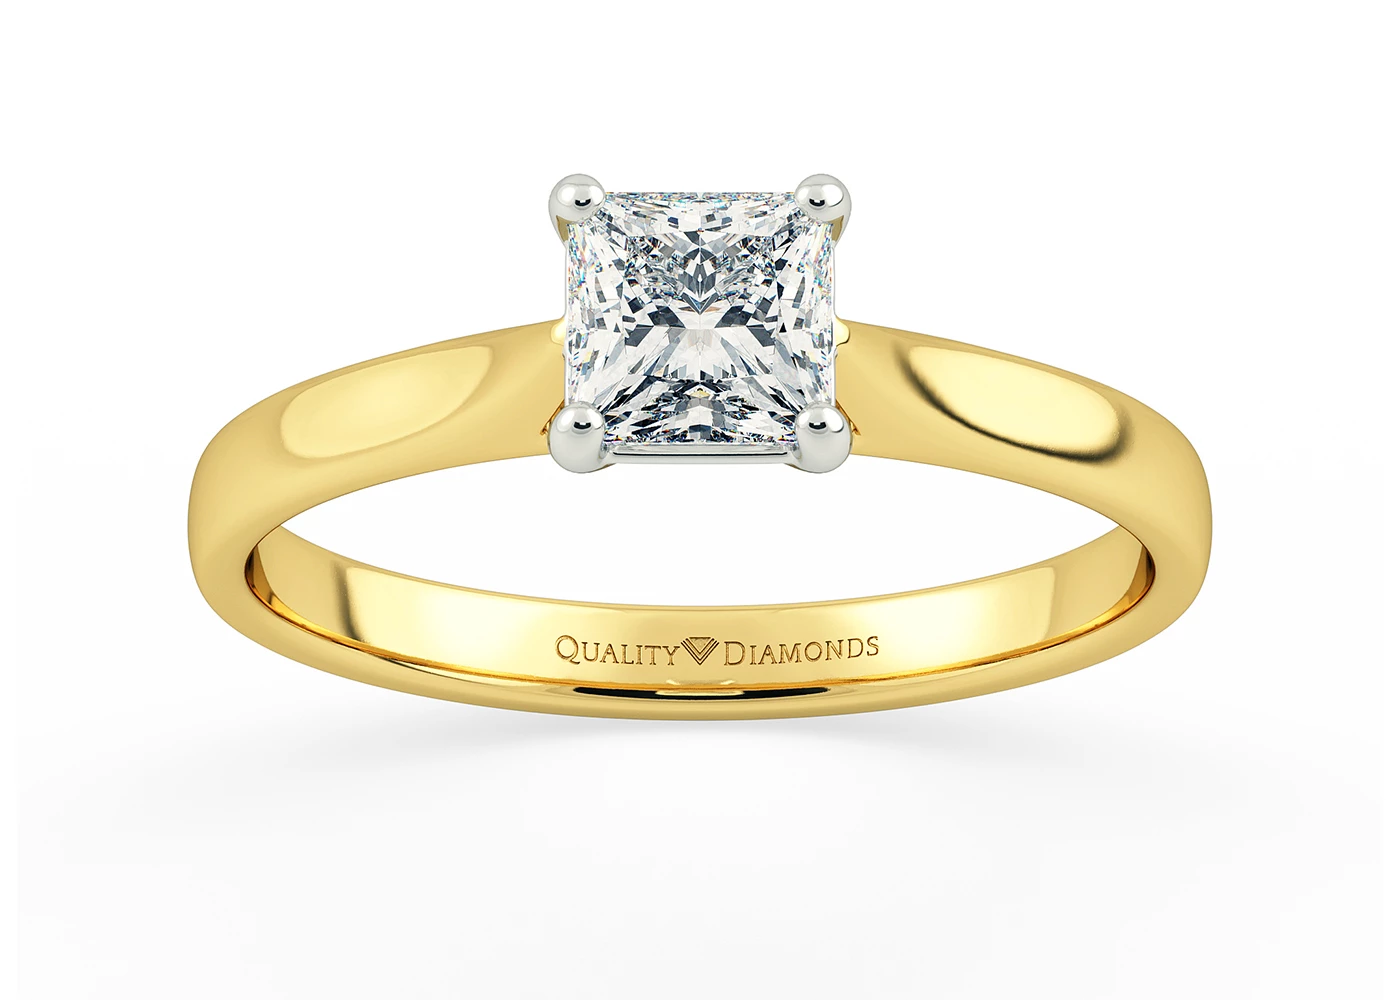 Princess Clara Diamond Ring in 18K Yellow Gold